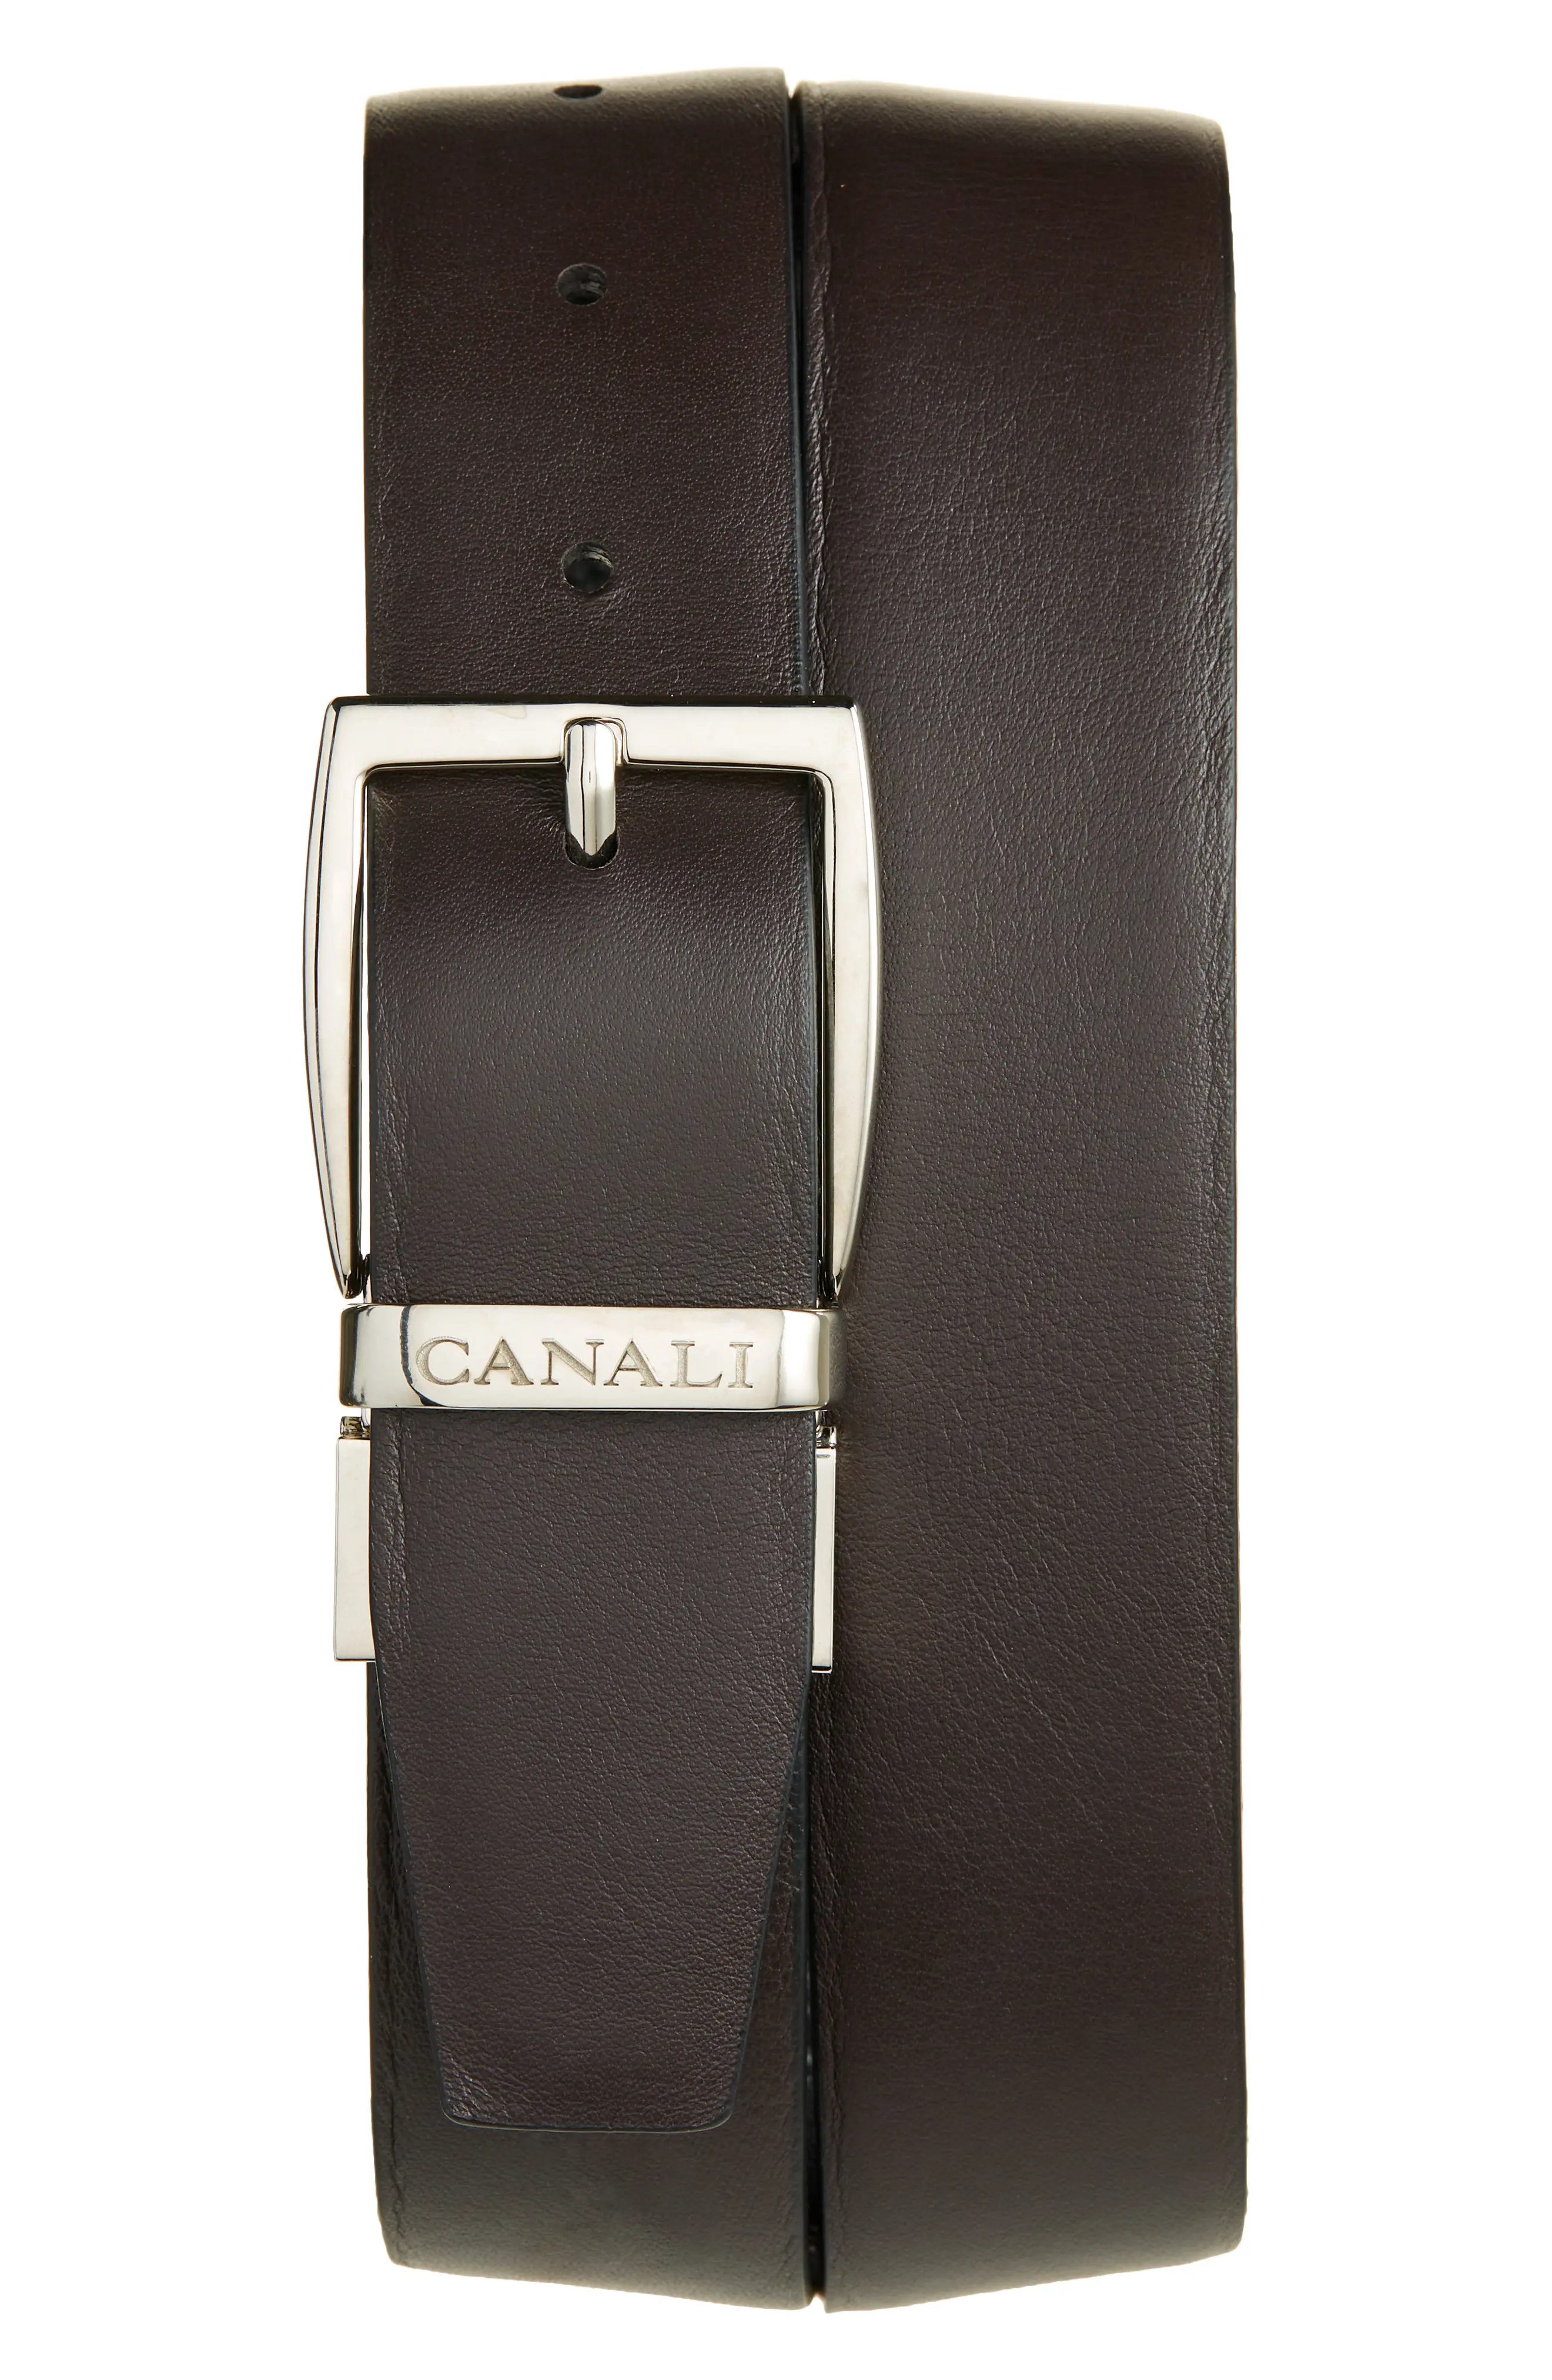 Reversible Leather Belt - 2